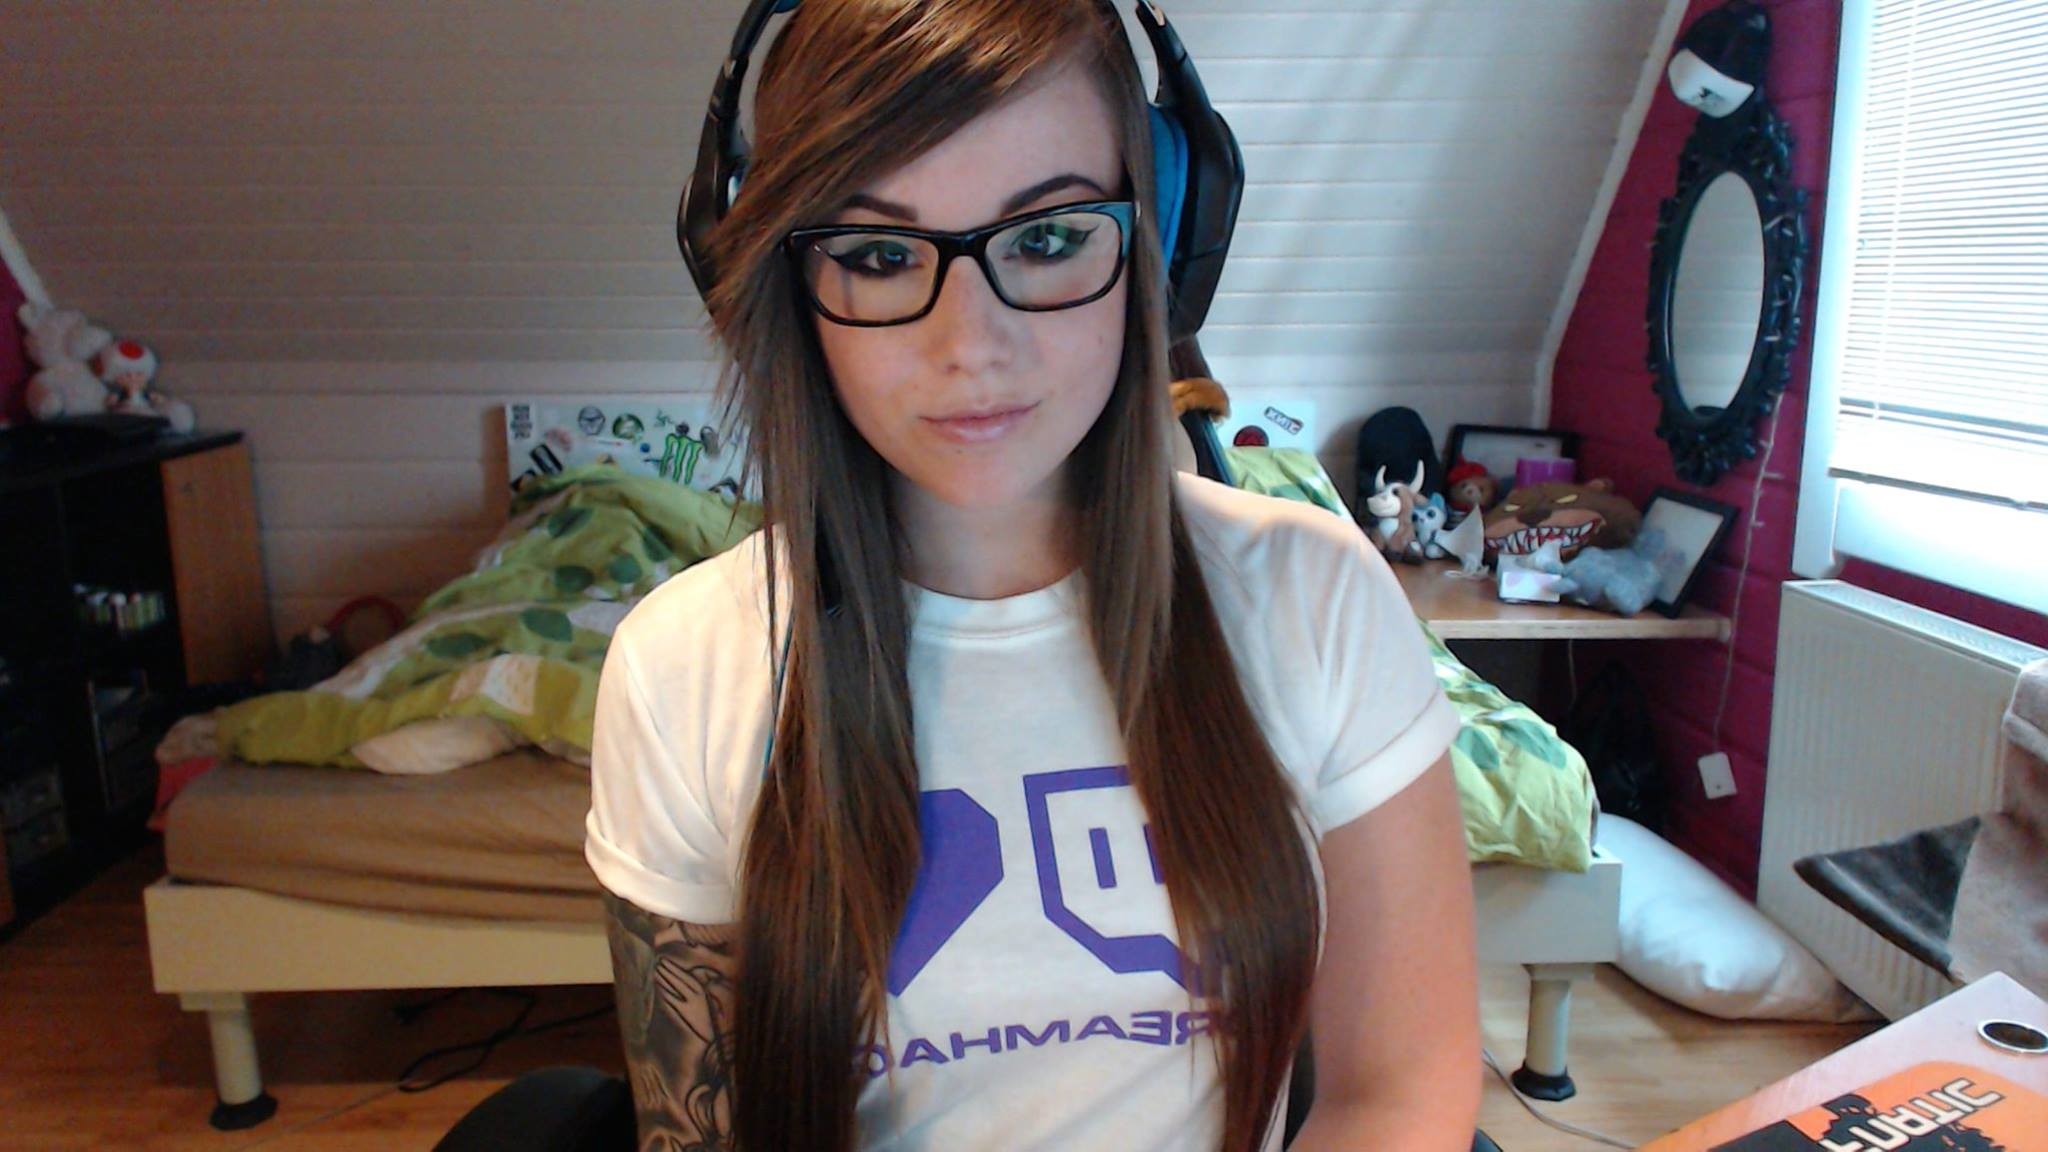 gamer girl wallpaper,hair,eyewear,glasses,hairstyle,eyebrow